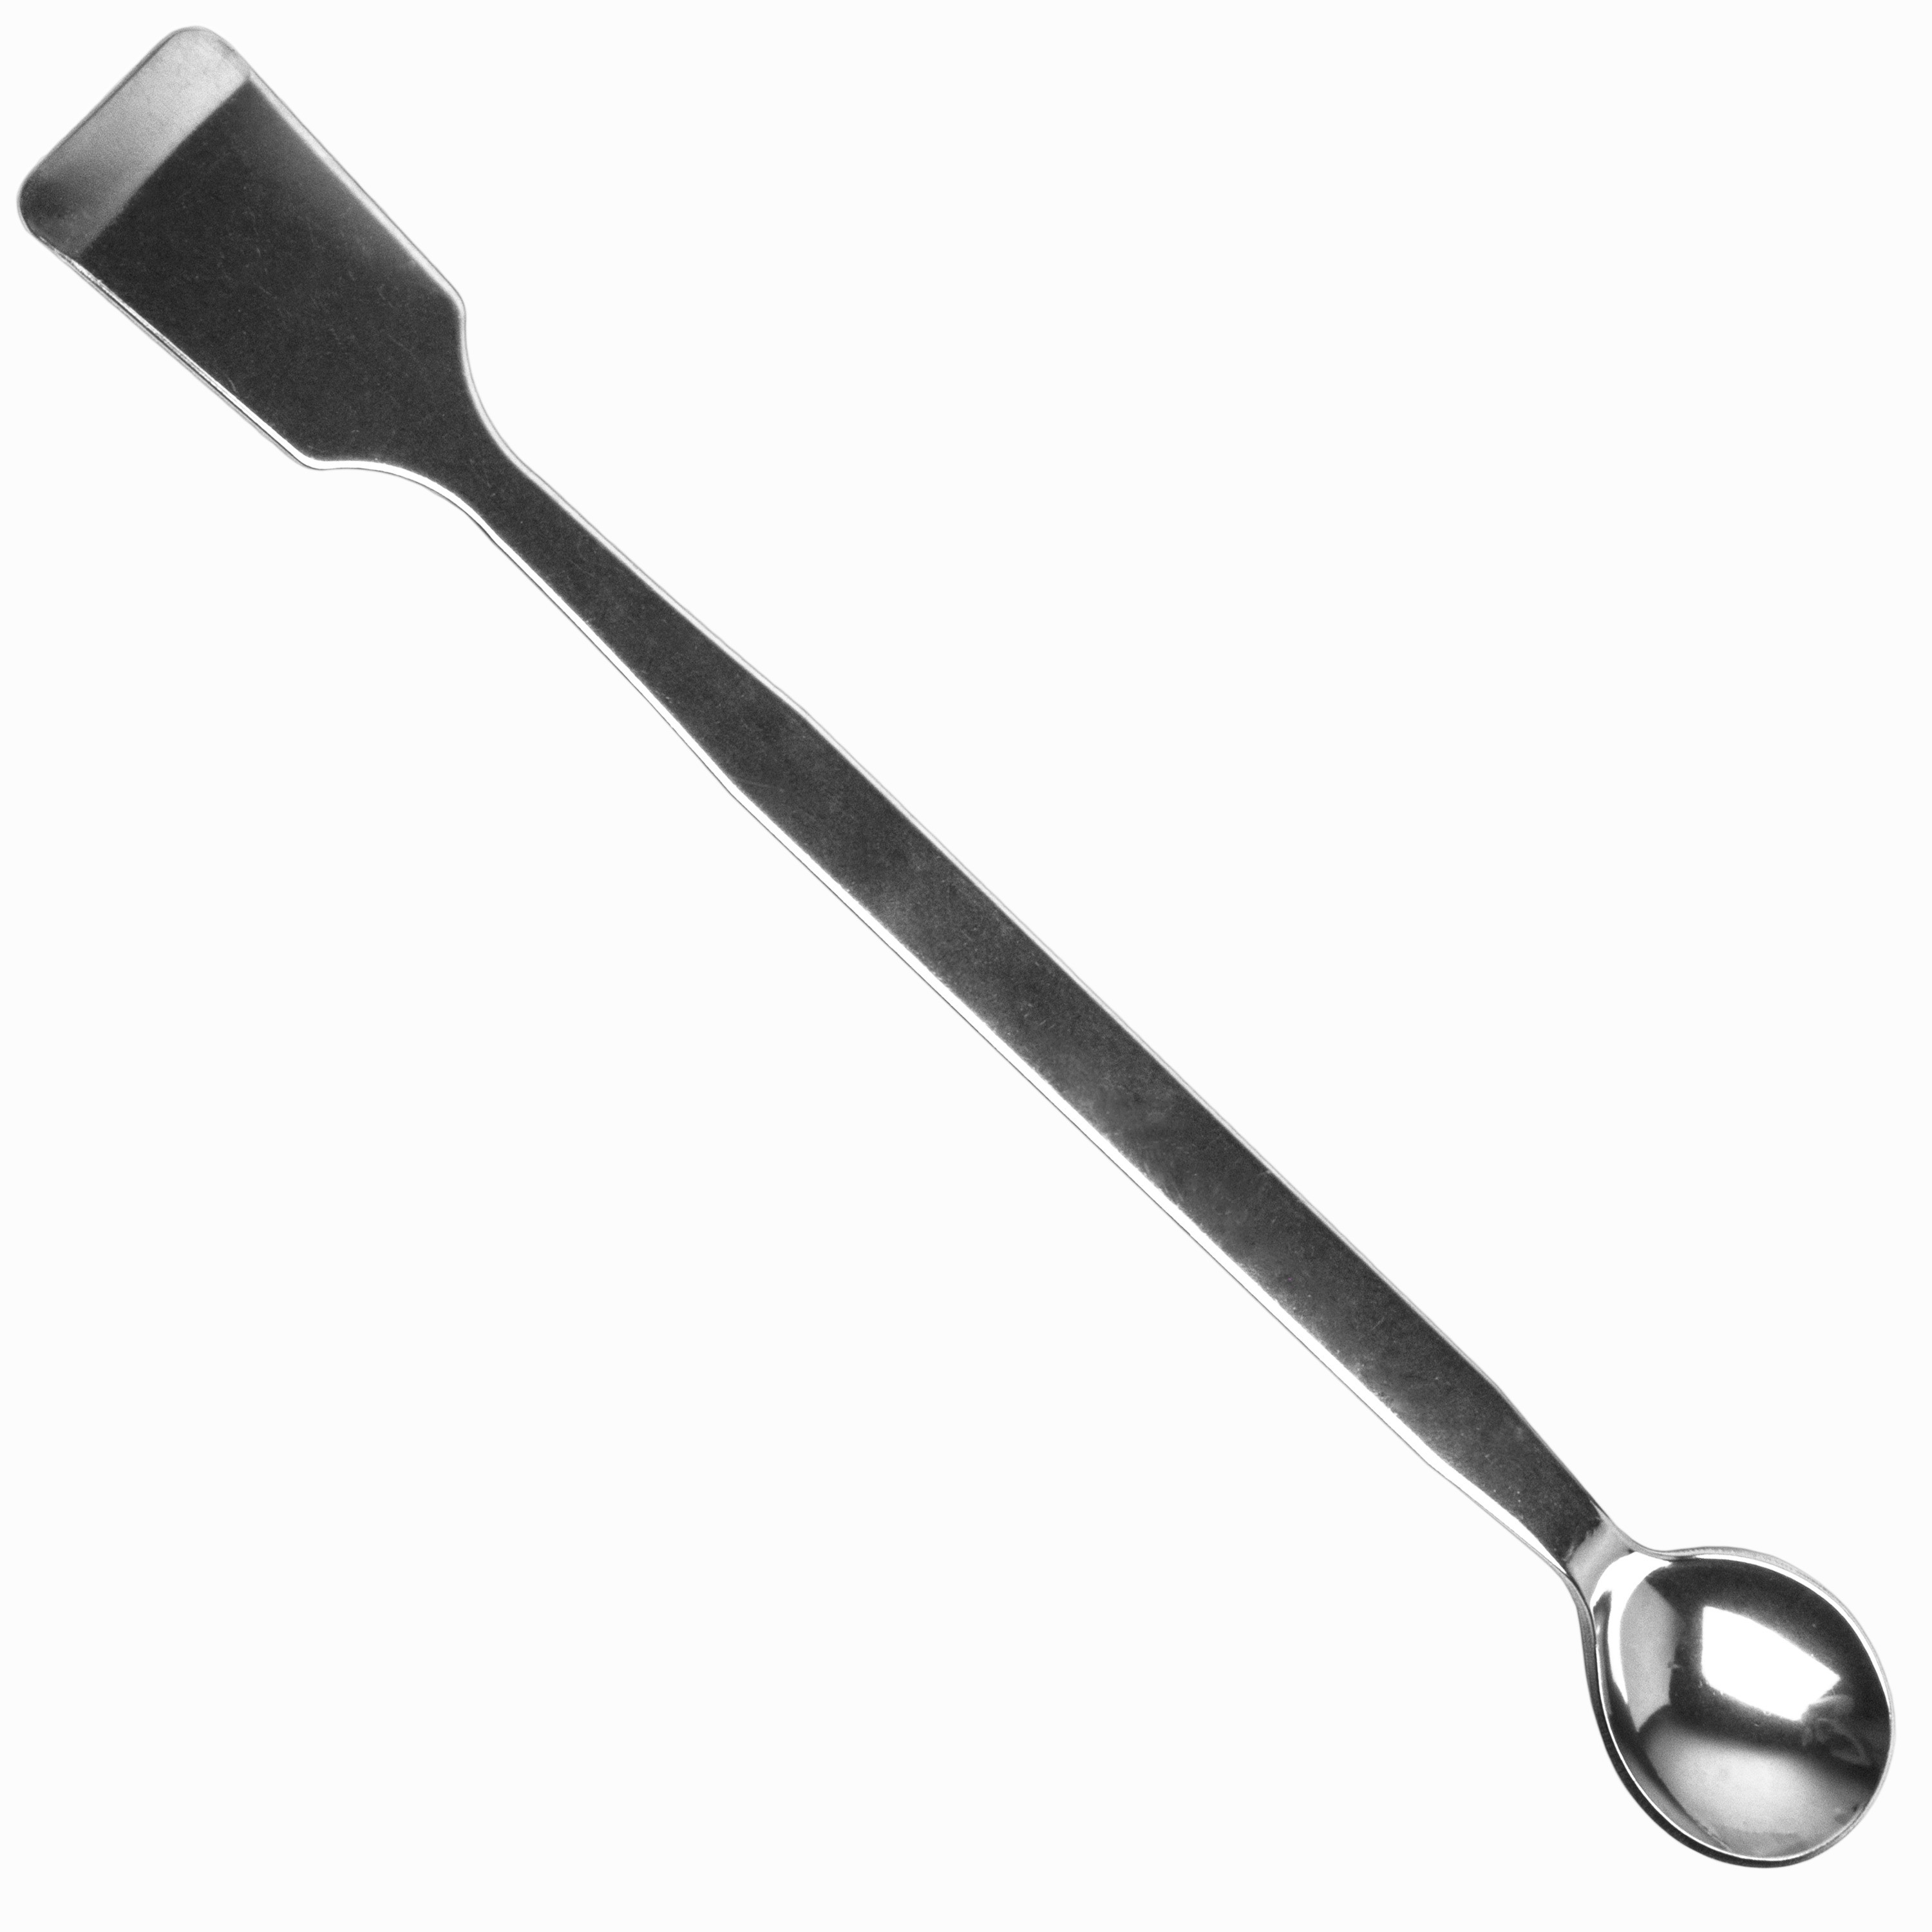 laboratory metal spatula